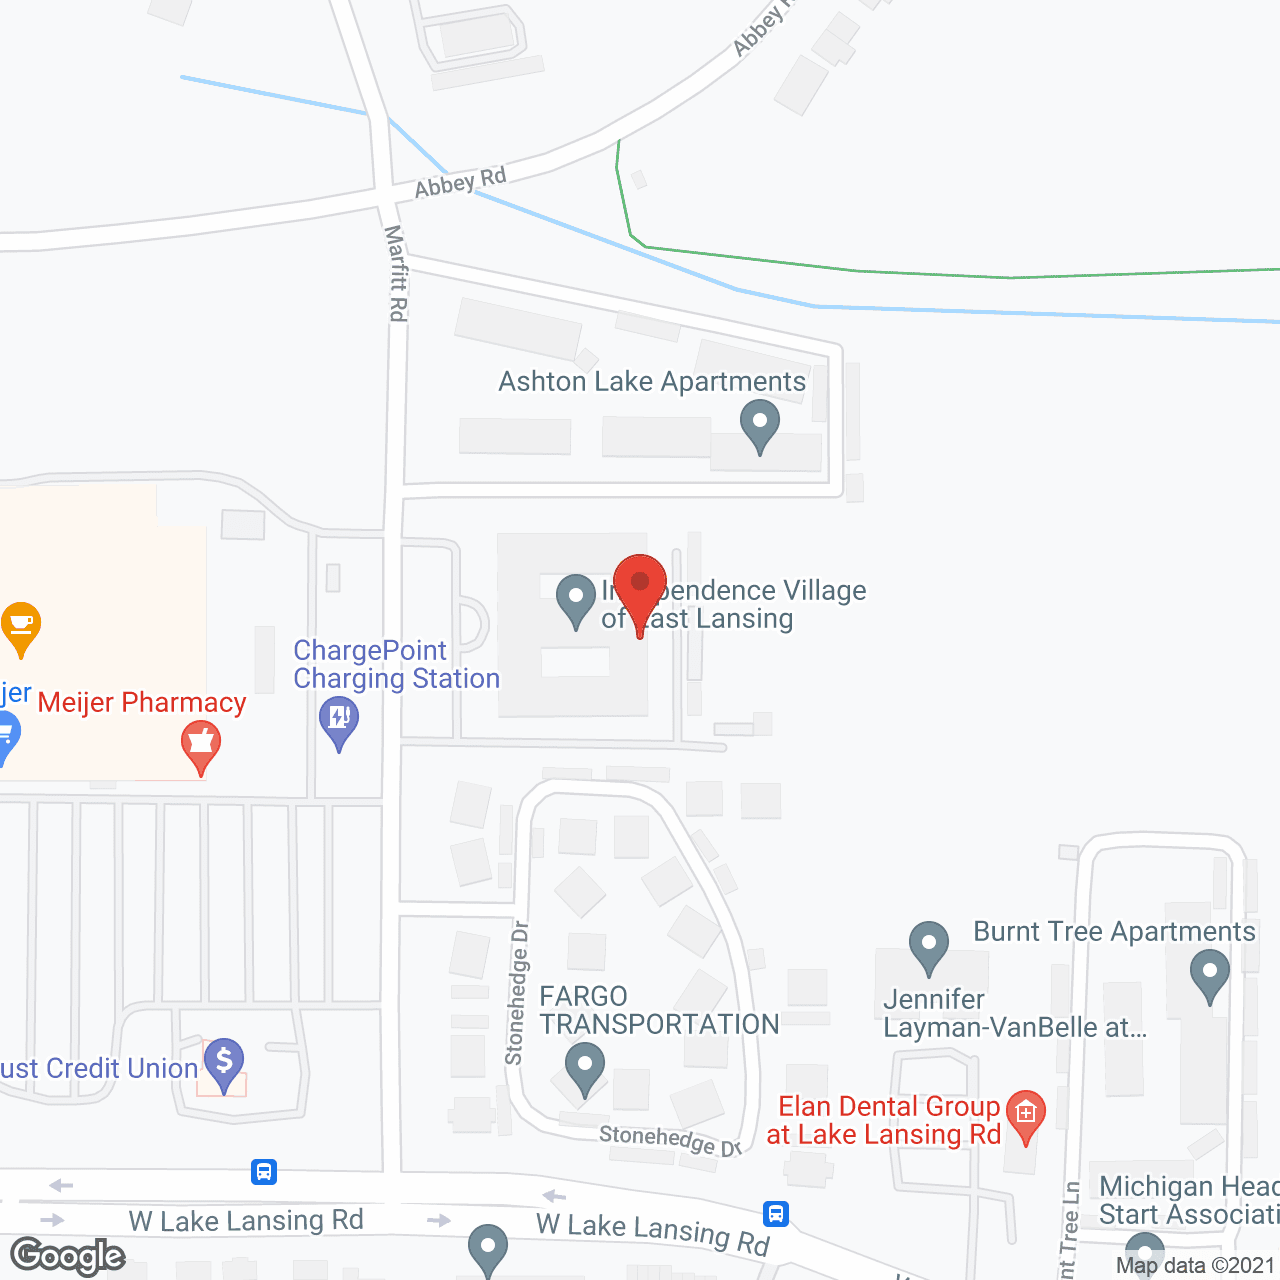 Independence Village of East Lansing in google map